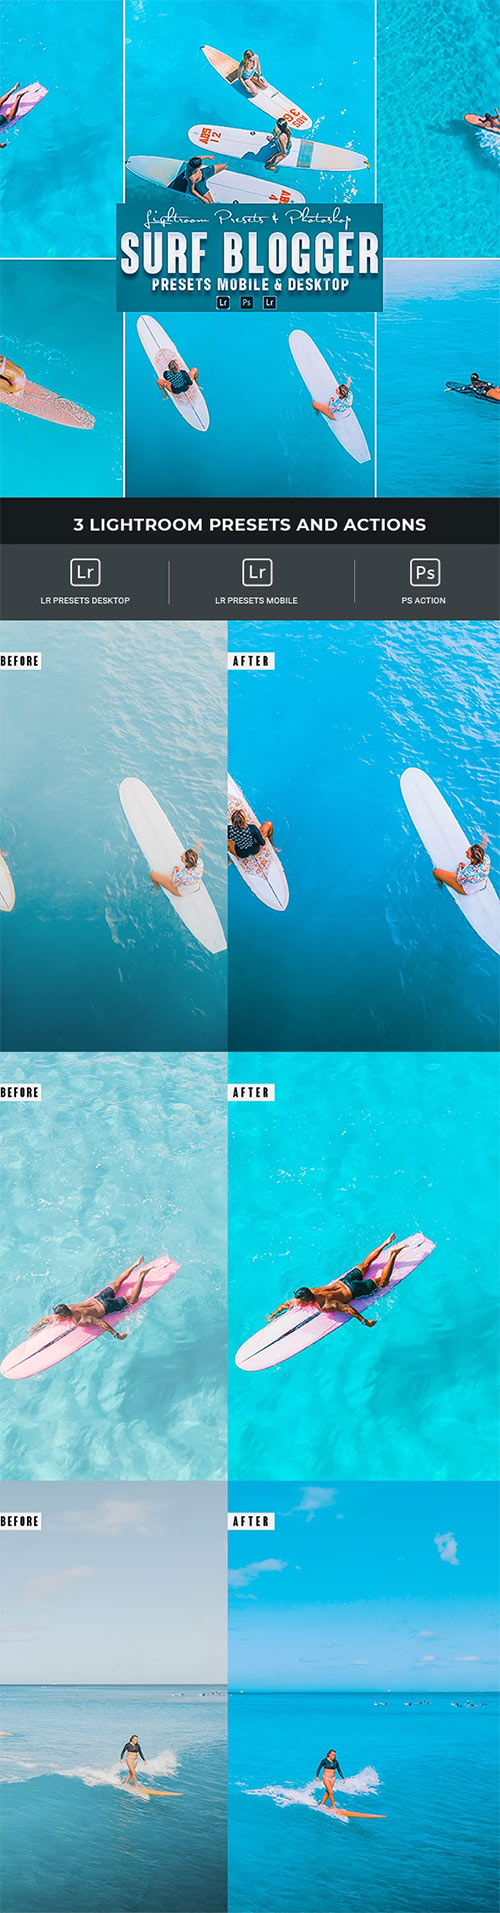 Surf Photoshop Action & Lightrom Presets 34742132